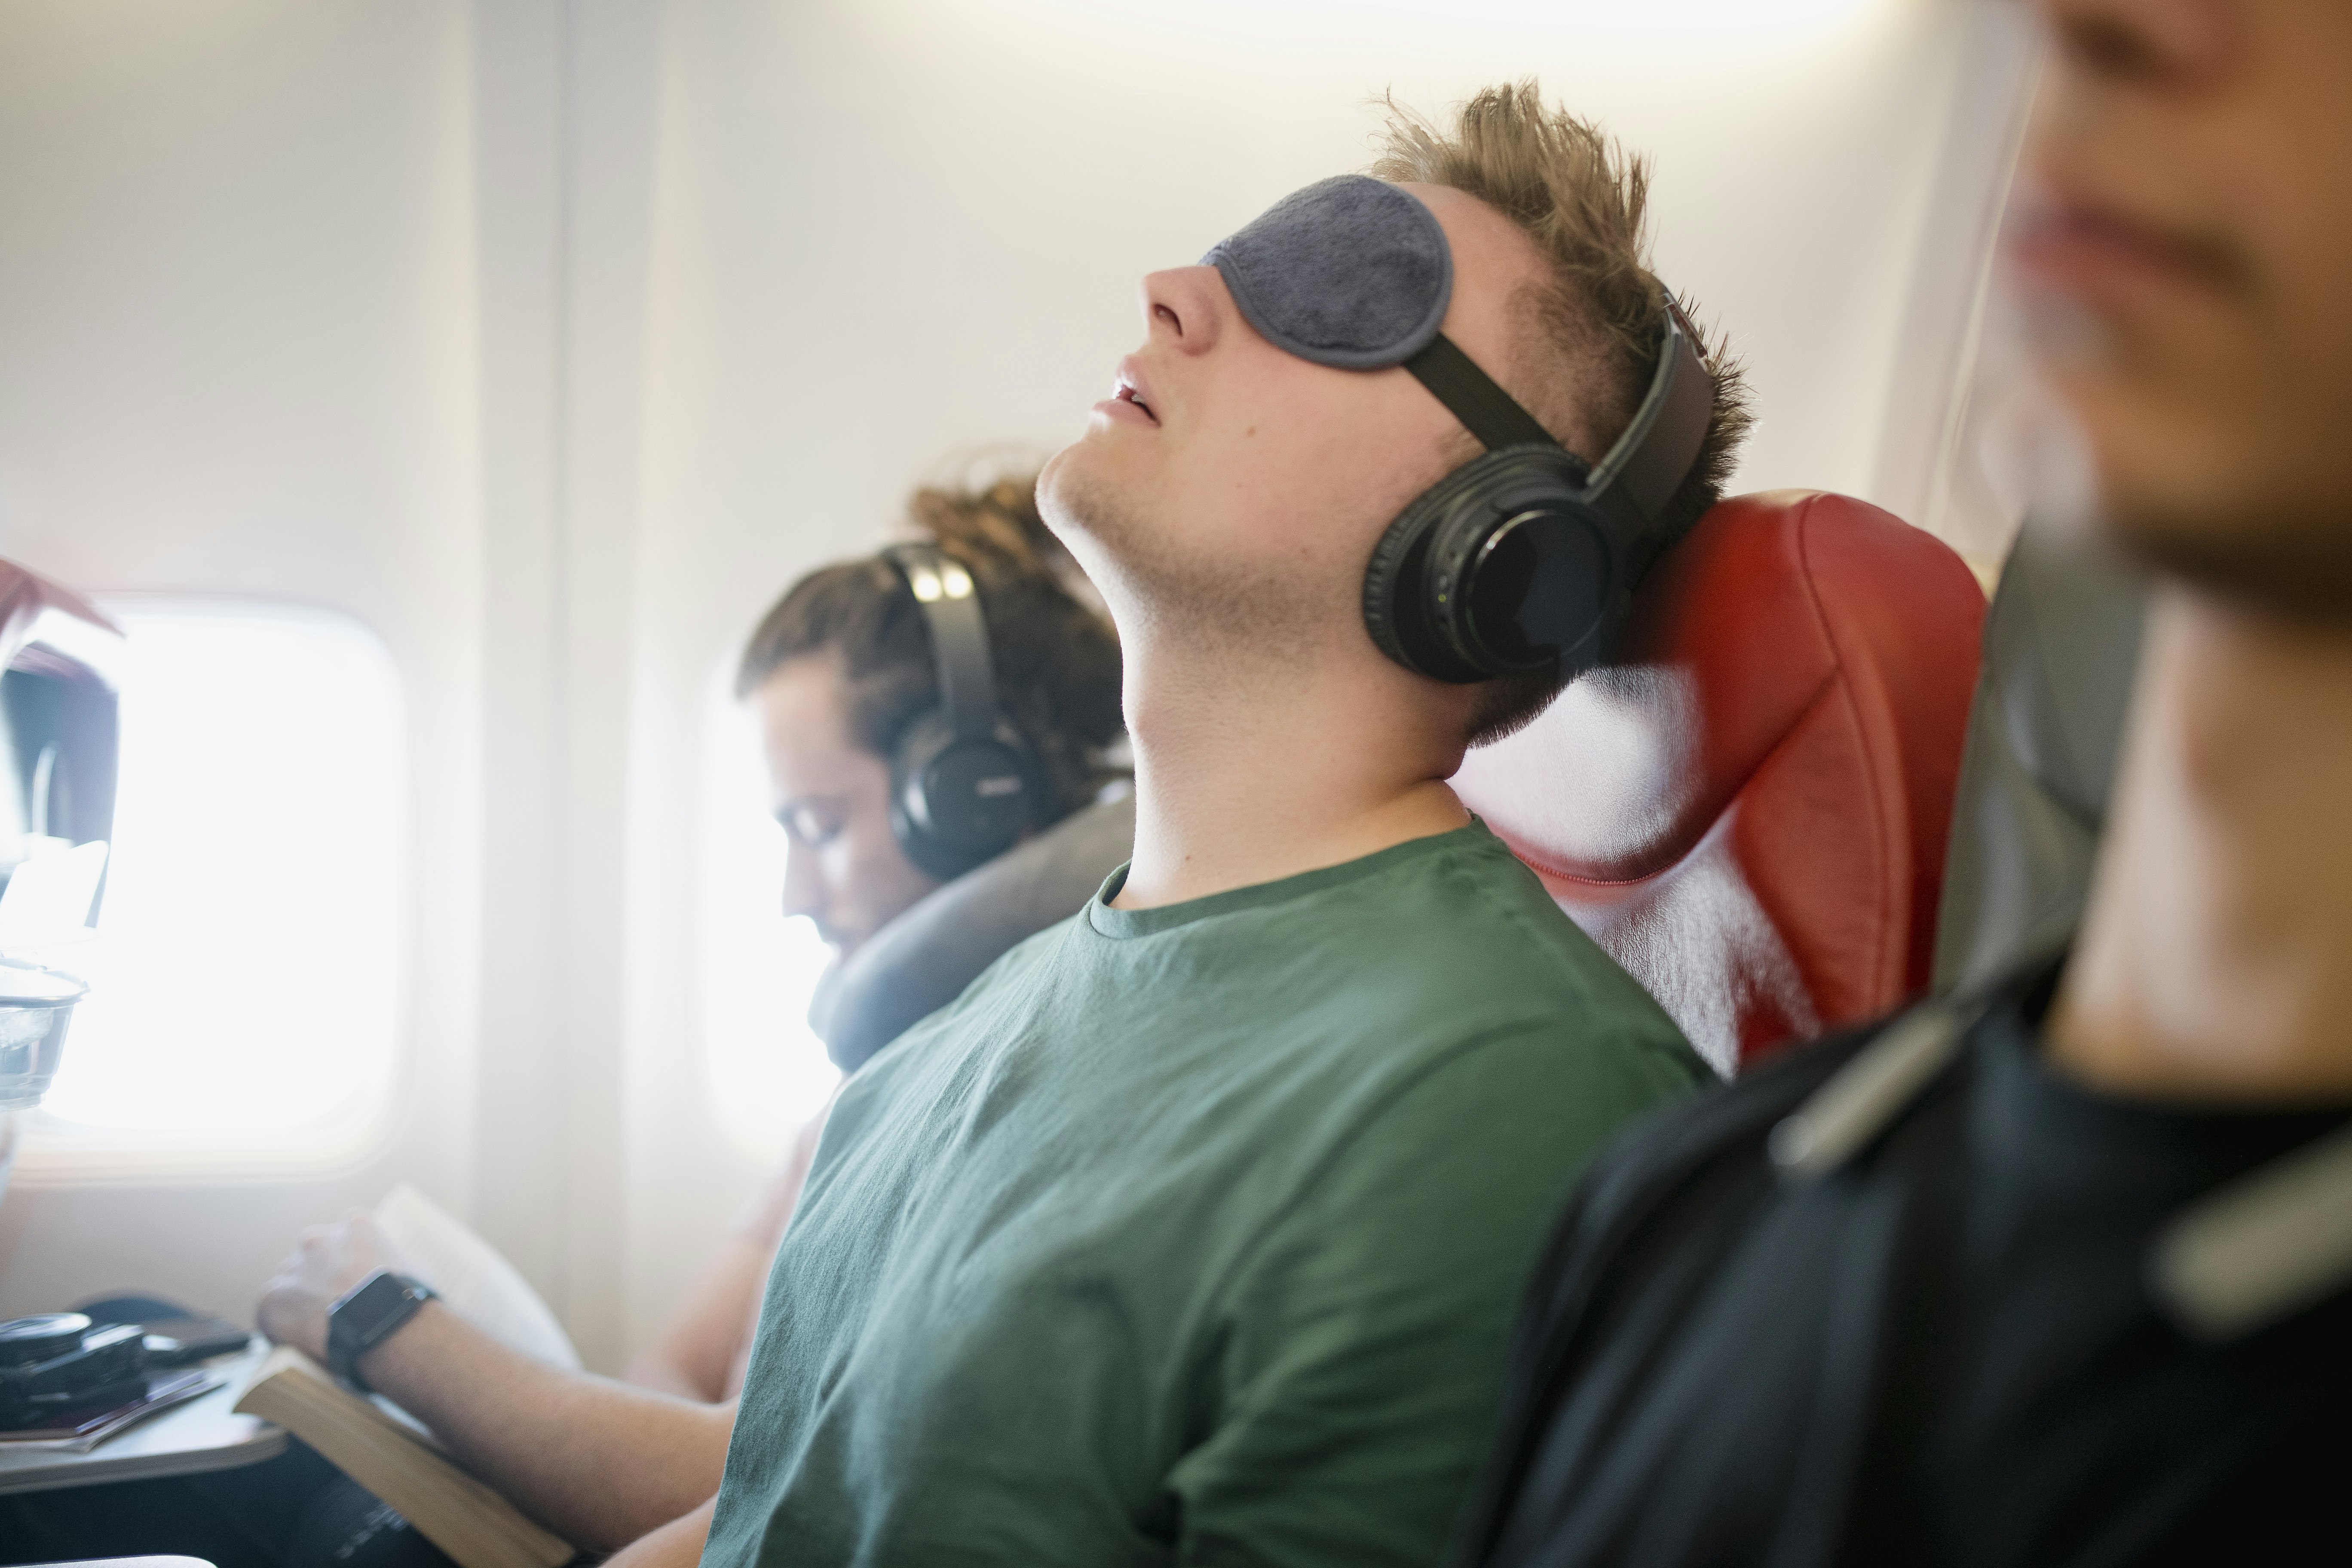 A man wearing a sleep mask is sleeping on a plane